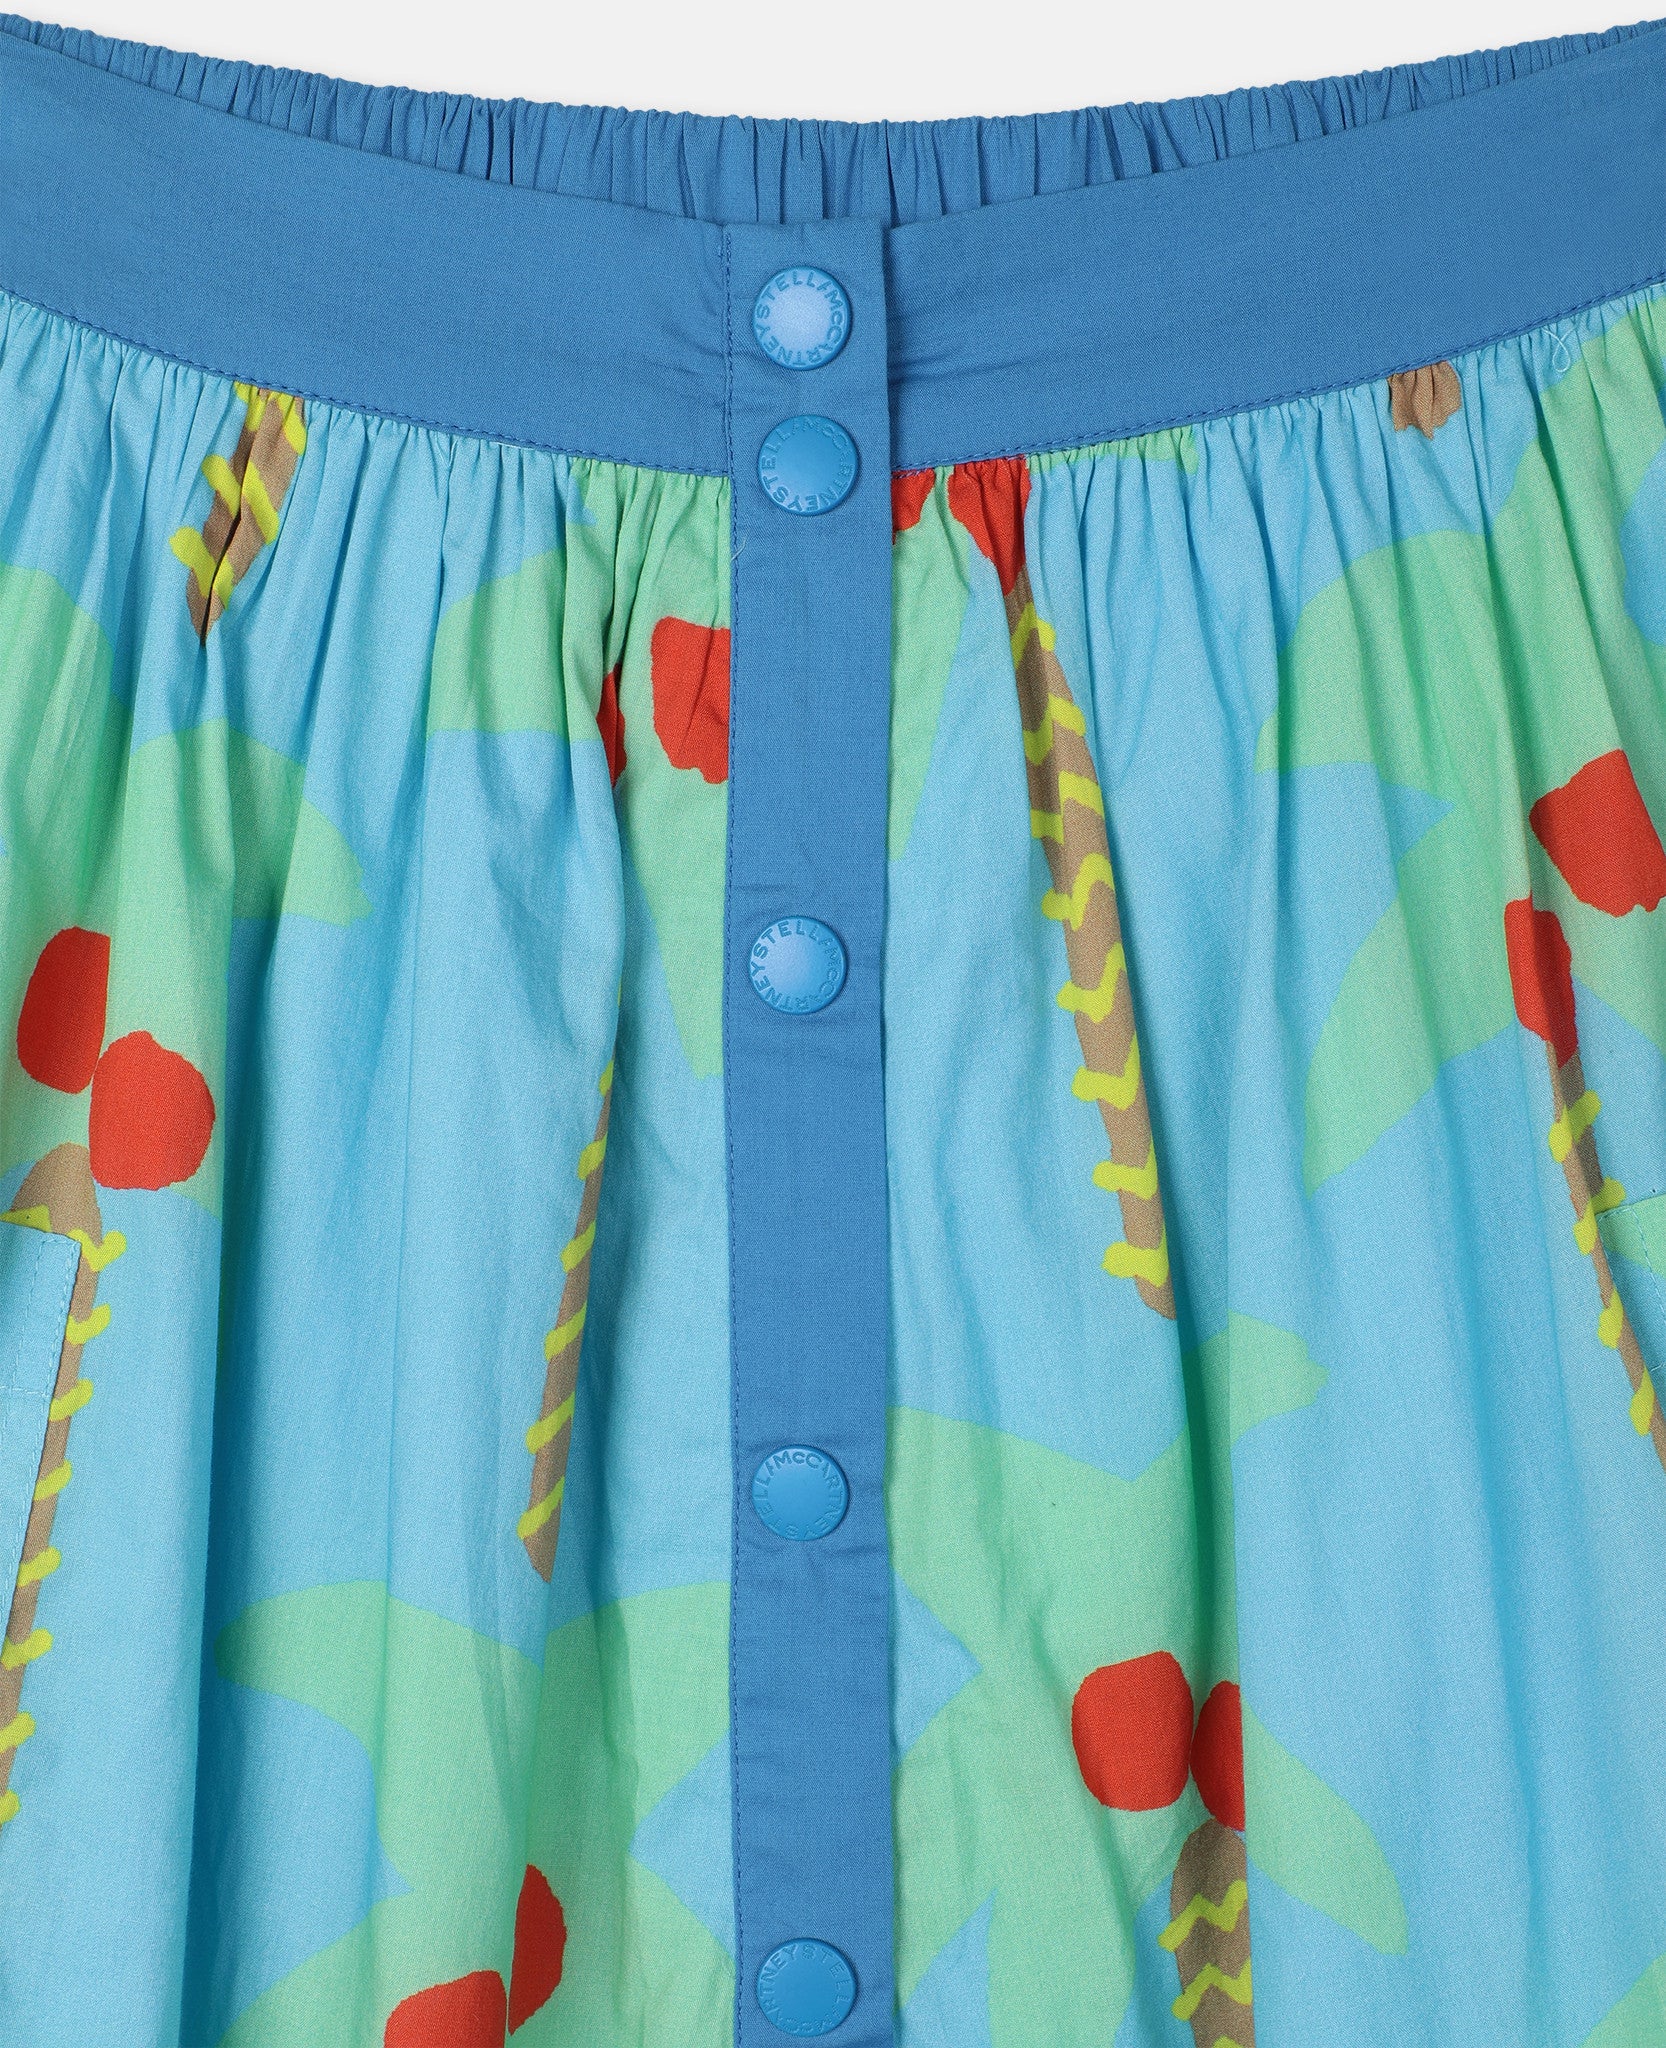 Girls Blue Palm Trees Cotton Skirt